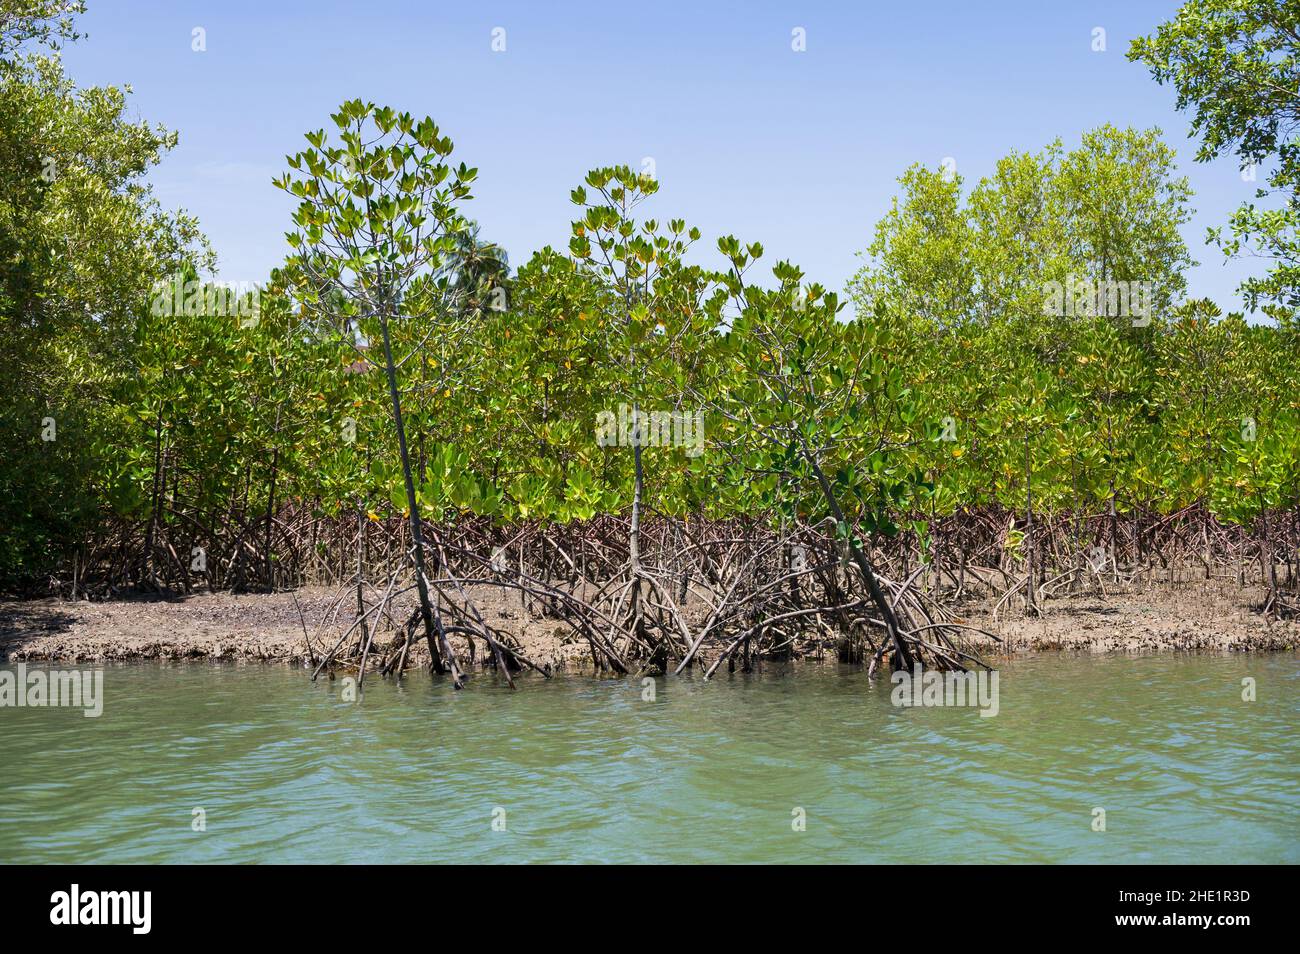 Mangroves (Rhizophora mucronata) growing along shoreline of brackish river near ocean, Kenya Stock Photo